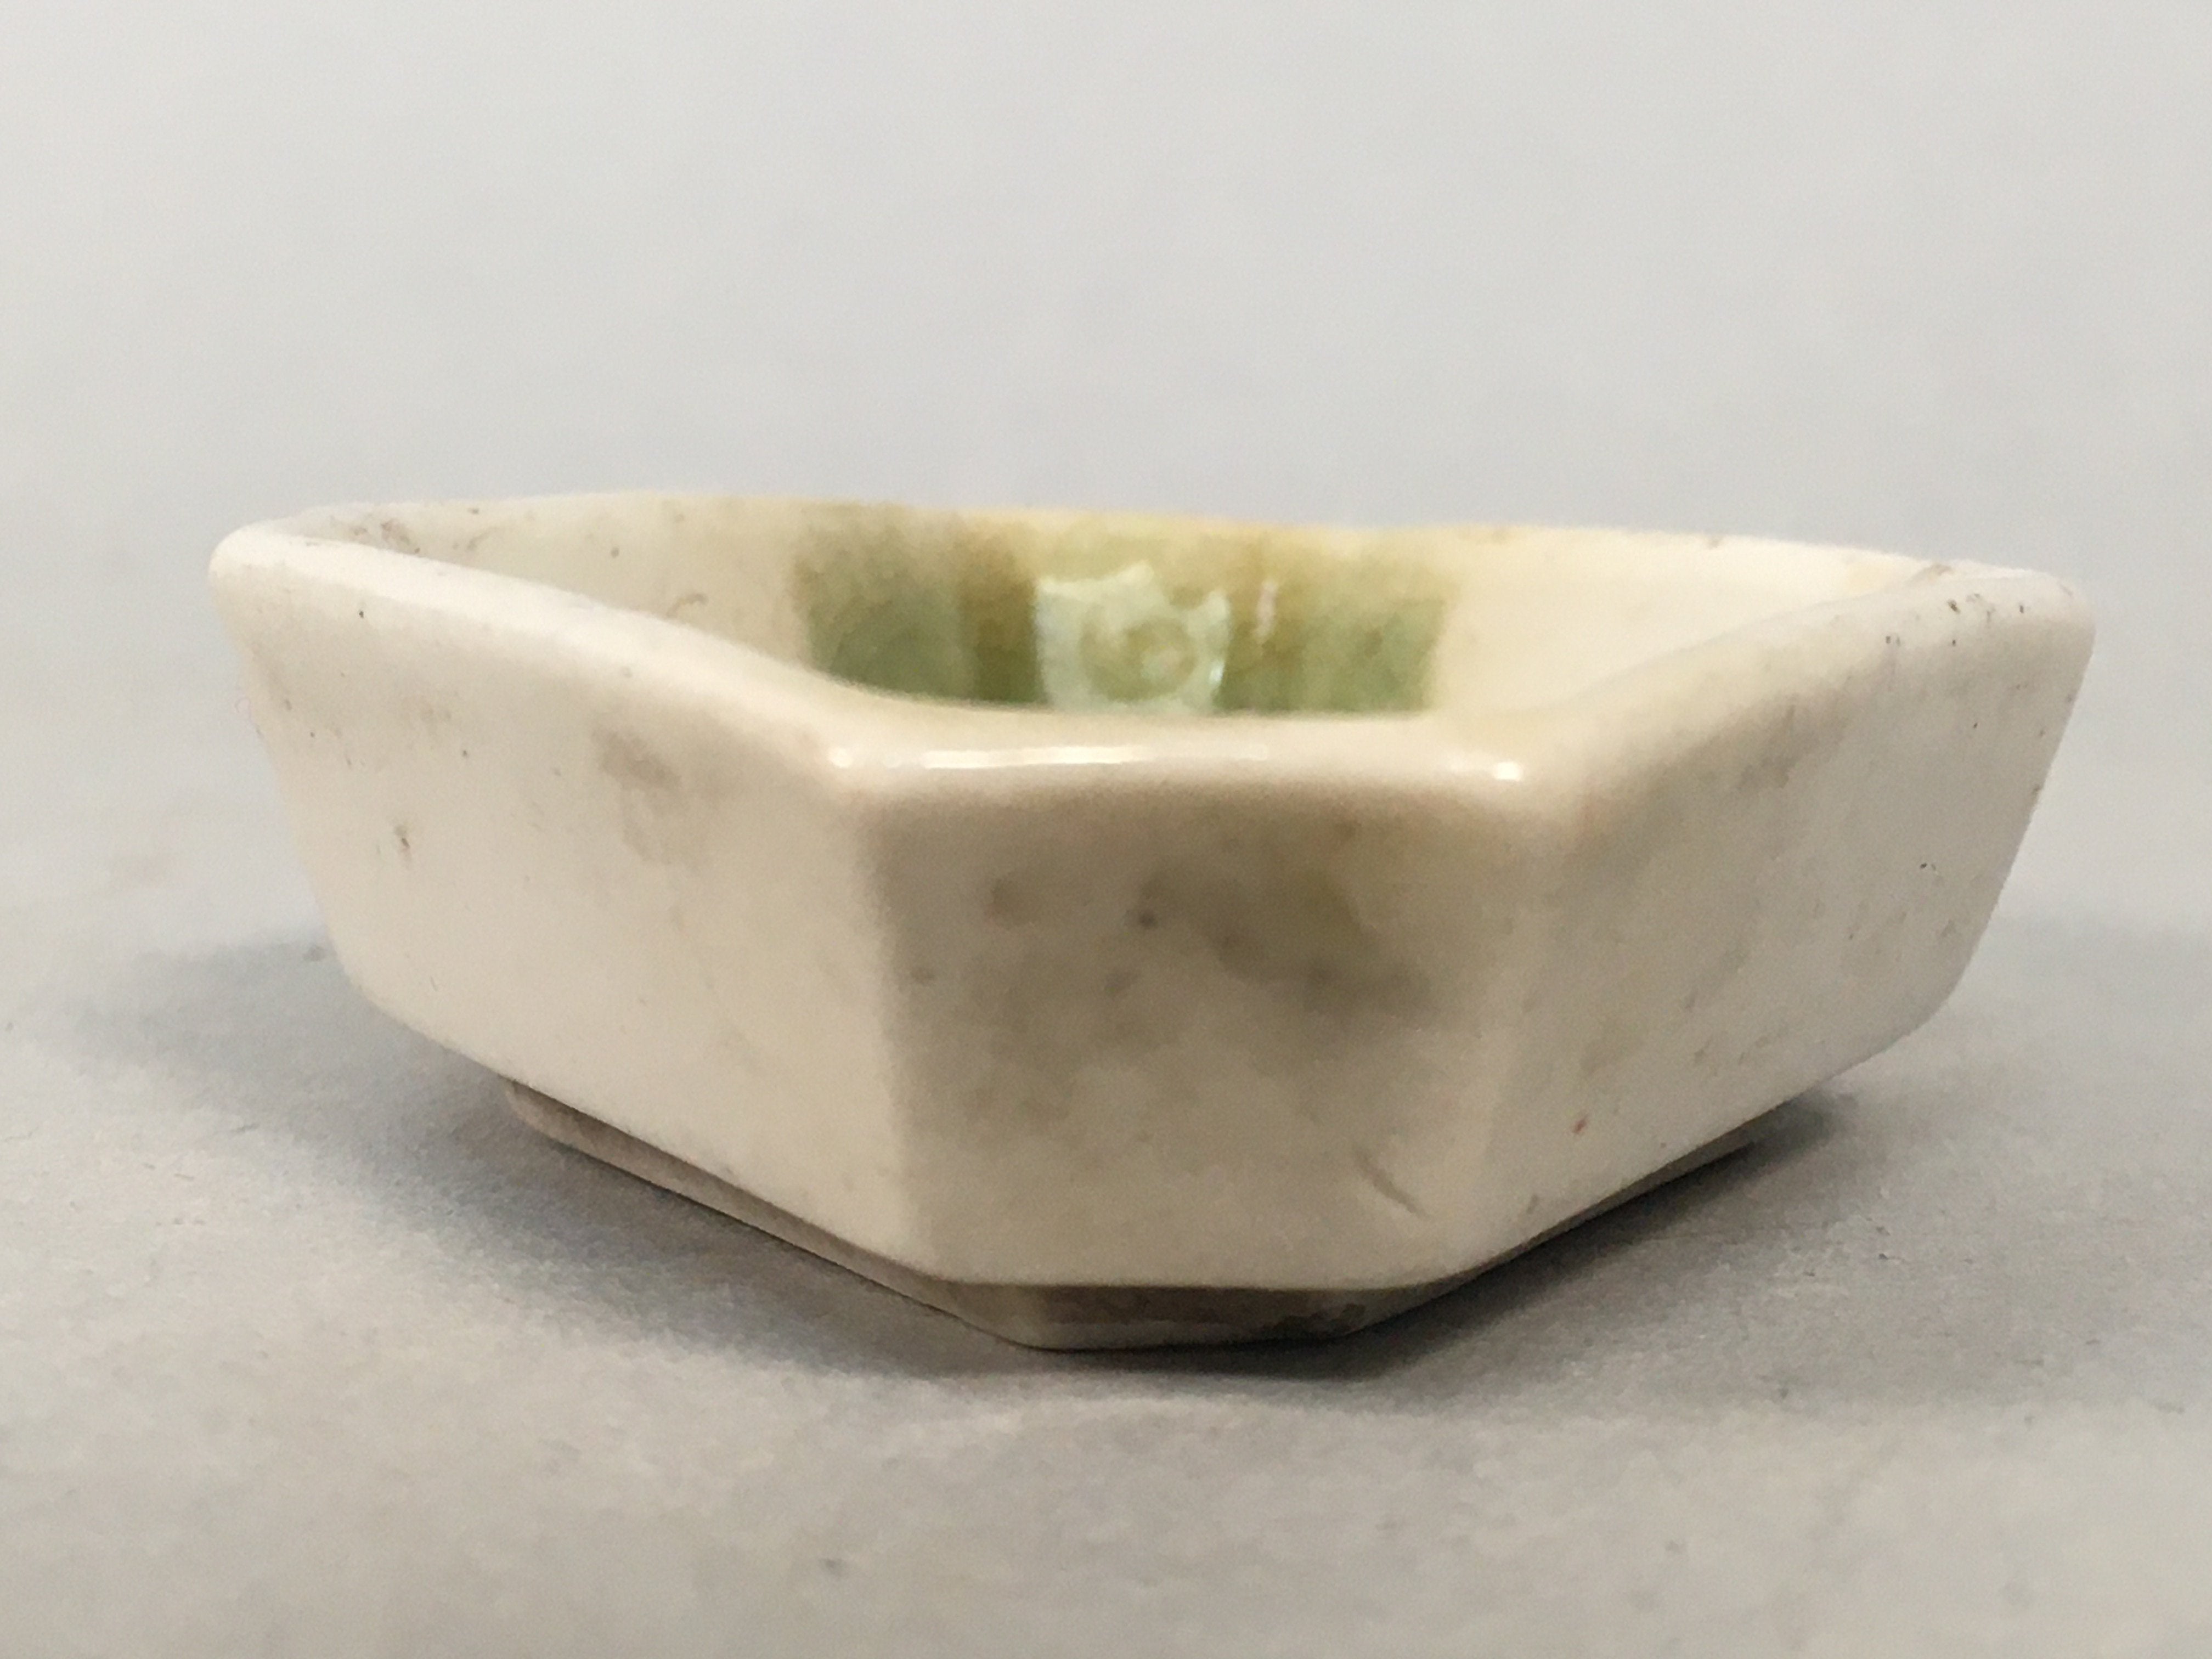 Japanese Porcelain Small Bowl Vtg Kozara Diamond Soy Sauce Dipping Dish PP428